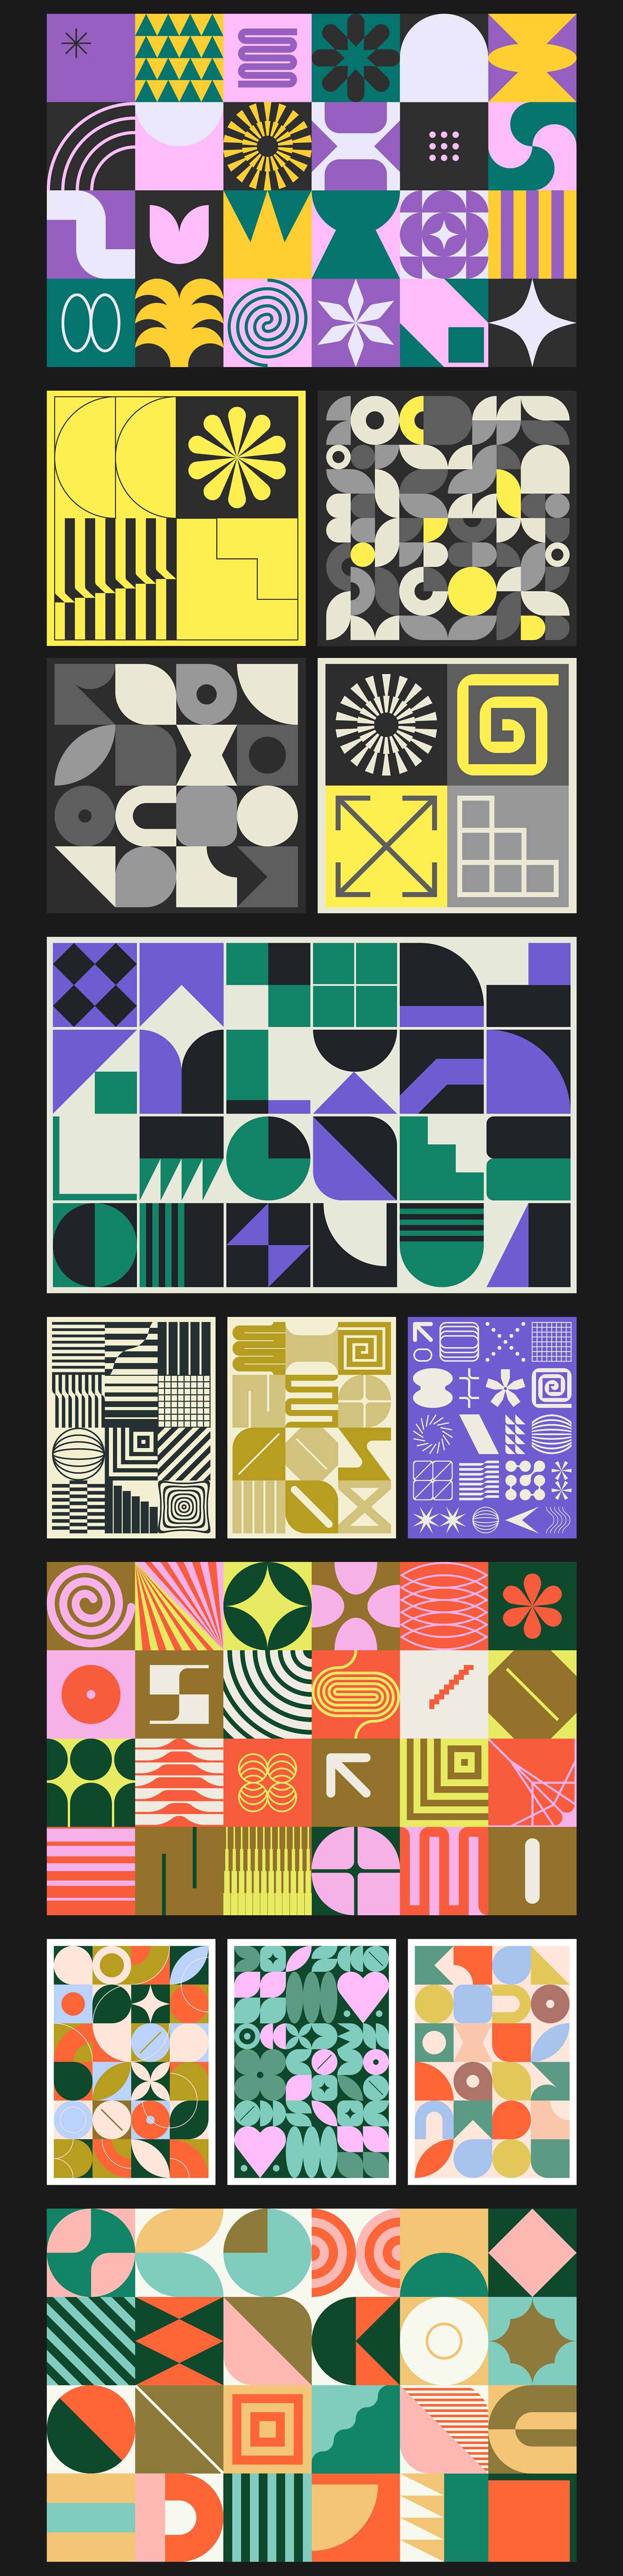 geometric bauhaus Minimalism Brutalism modernism shapes Poster Design symbols swiss design abstract